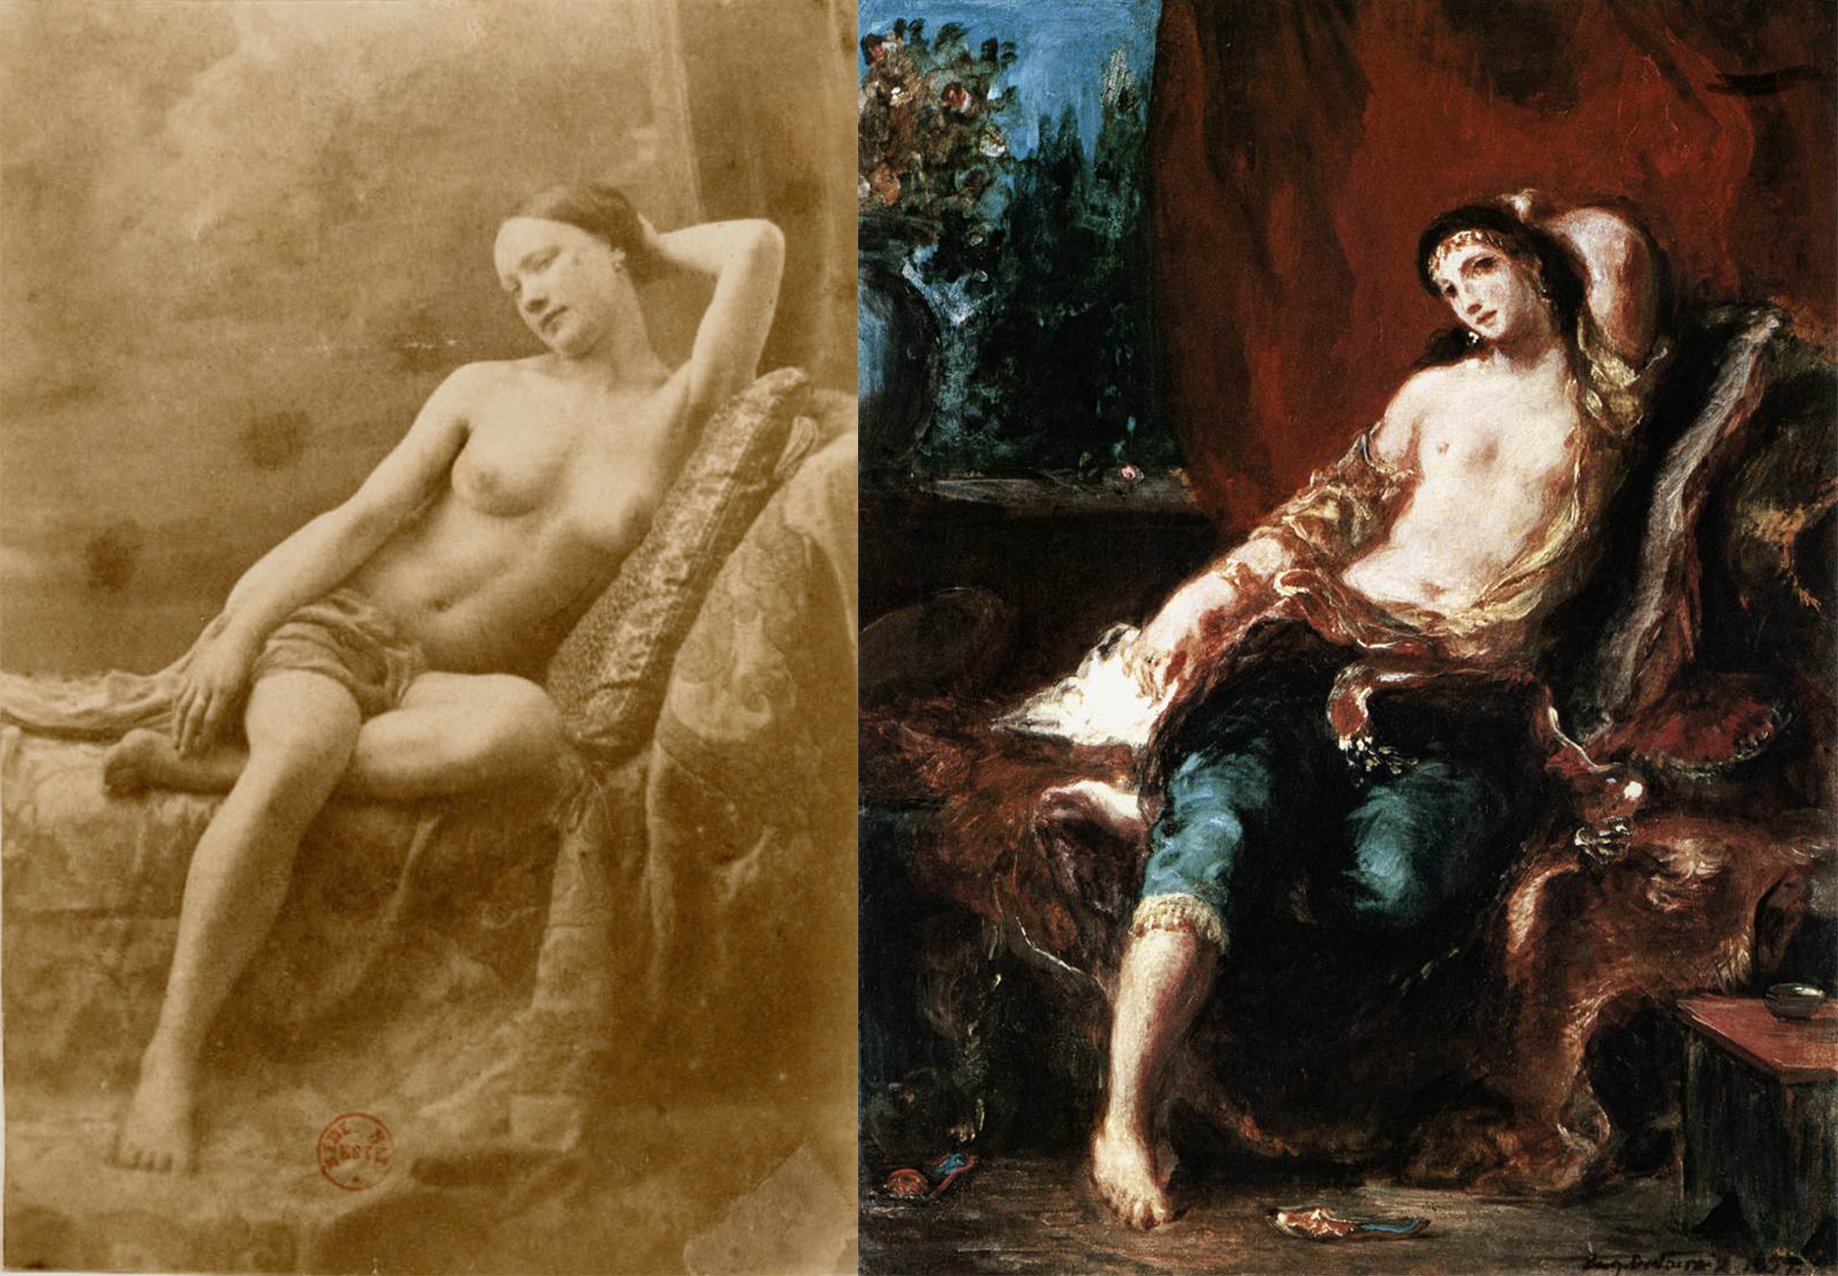 Odalisque / Odalisque by Eugène Durieu (/Eugène Delacroix) - 1833/1857 collection privée